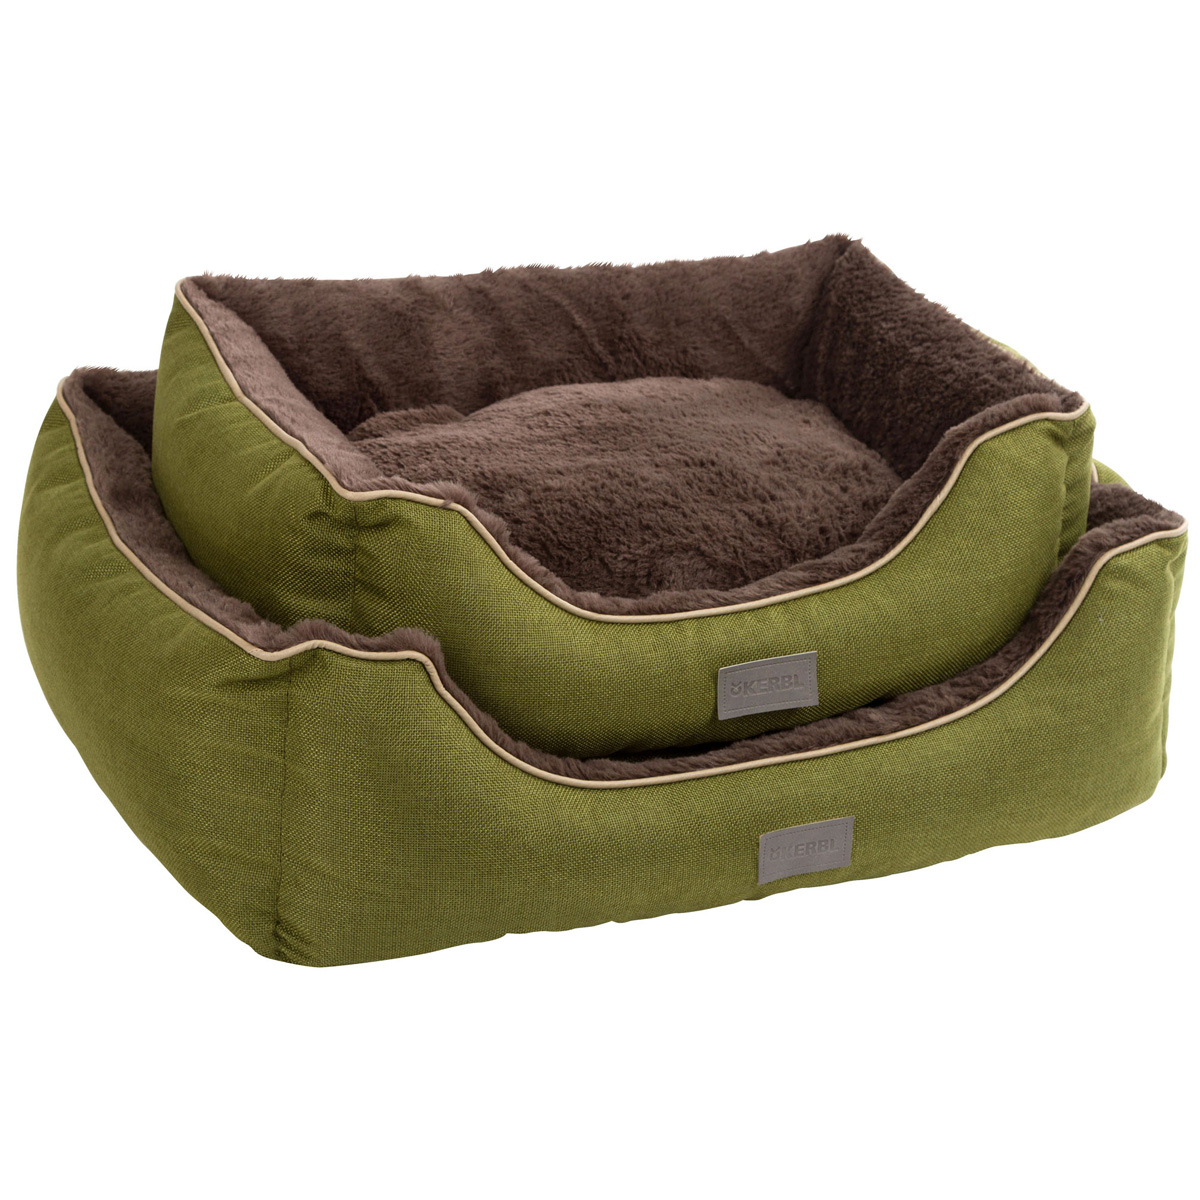 Snugly bed Samuel green 50 cm